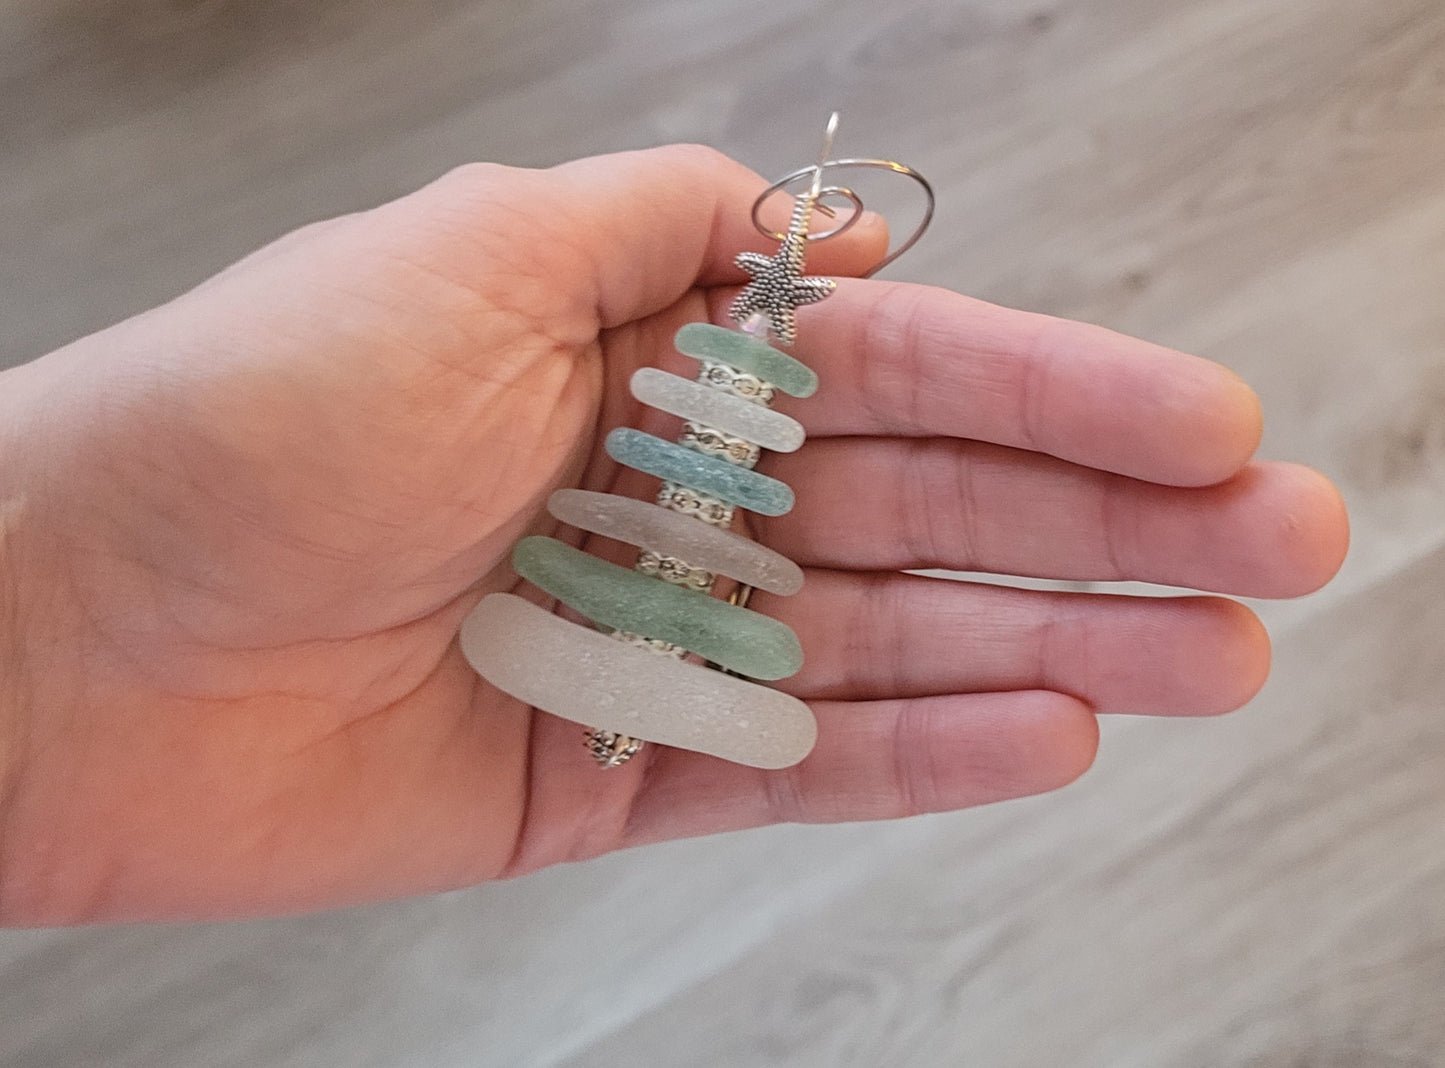 Genuine Sea Glass Christmas Tree Ornament